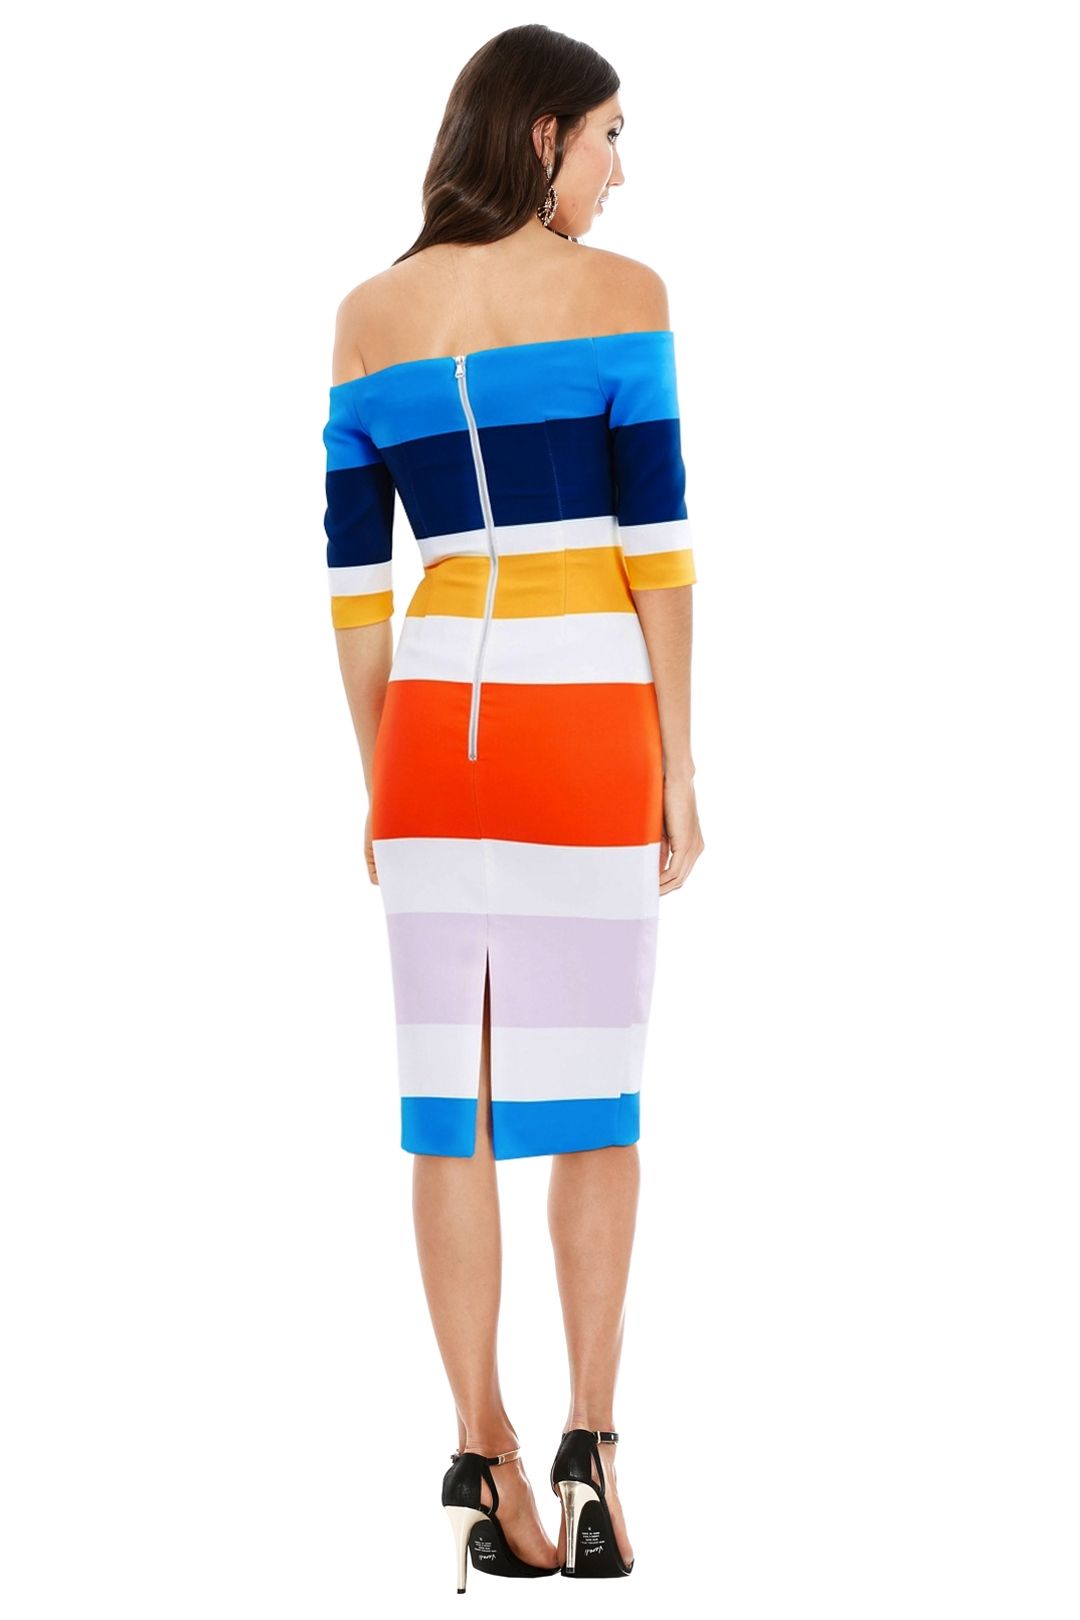 By Johnny - Bermuda Stripe Cut Off Dress - Multicolour - Back